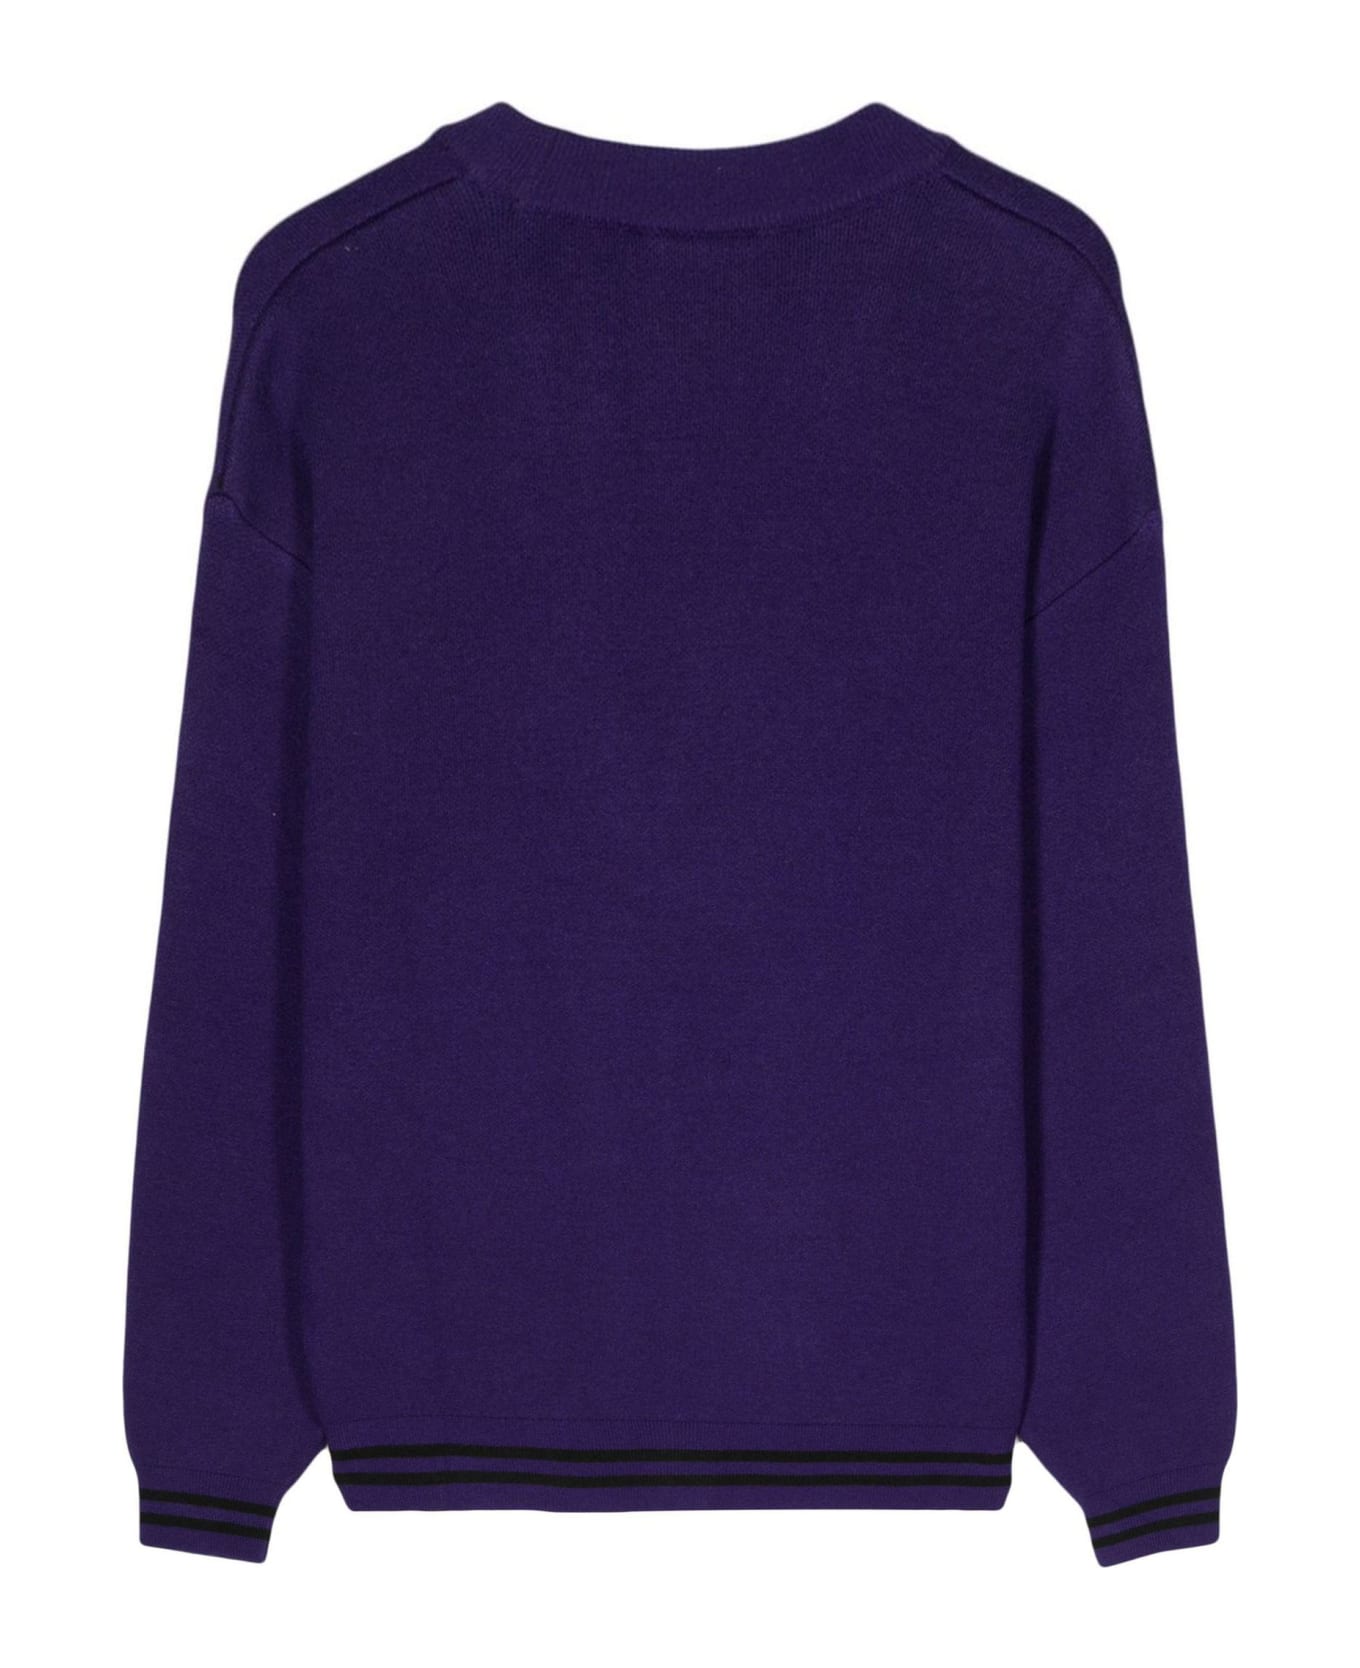 Carhartt Sweaters - Purple カーディガン